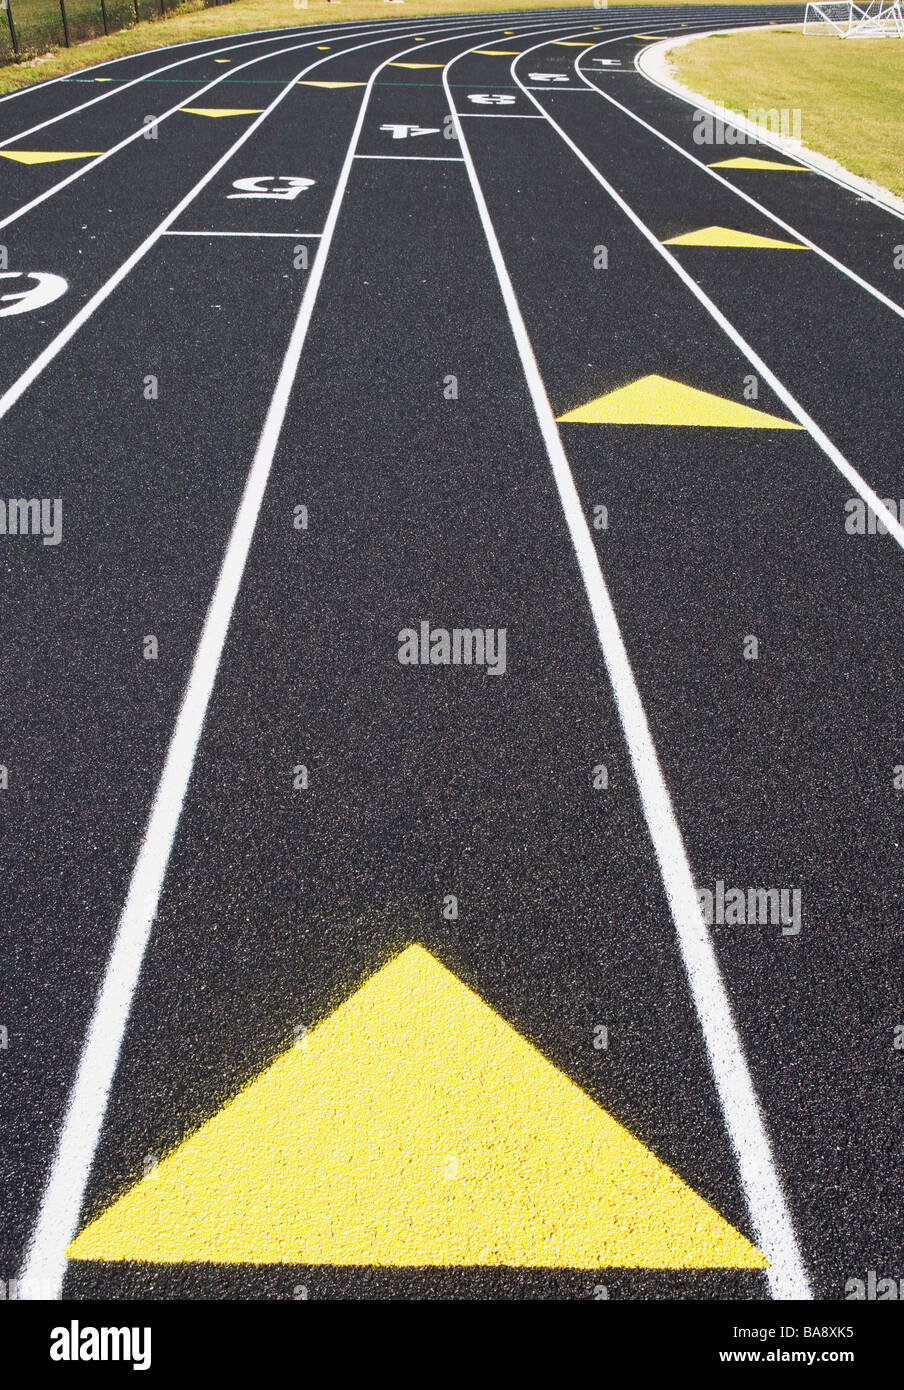 Lanes on running track Stock Photo